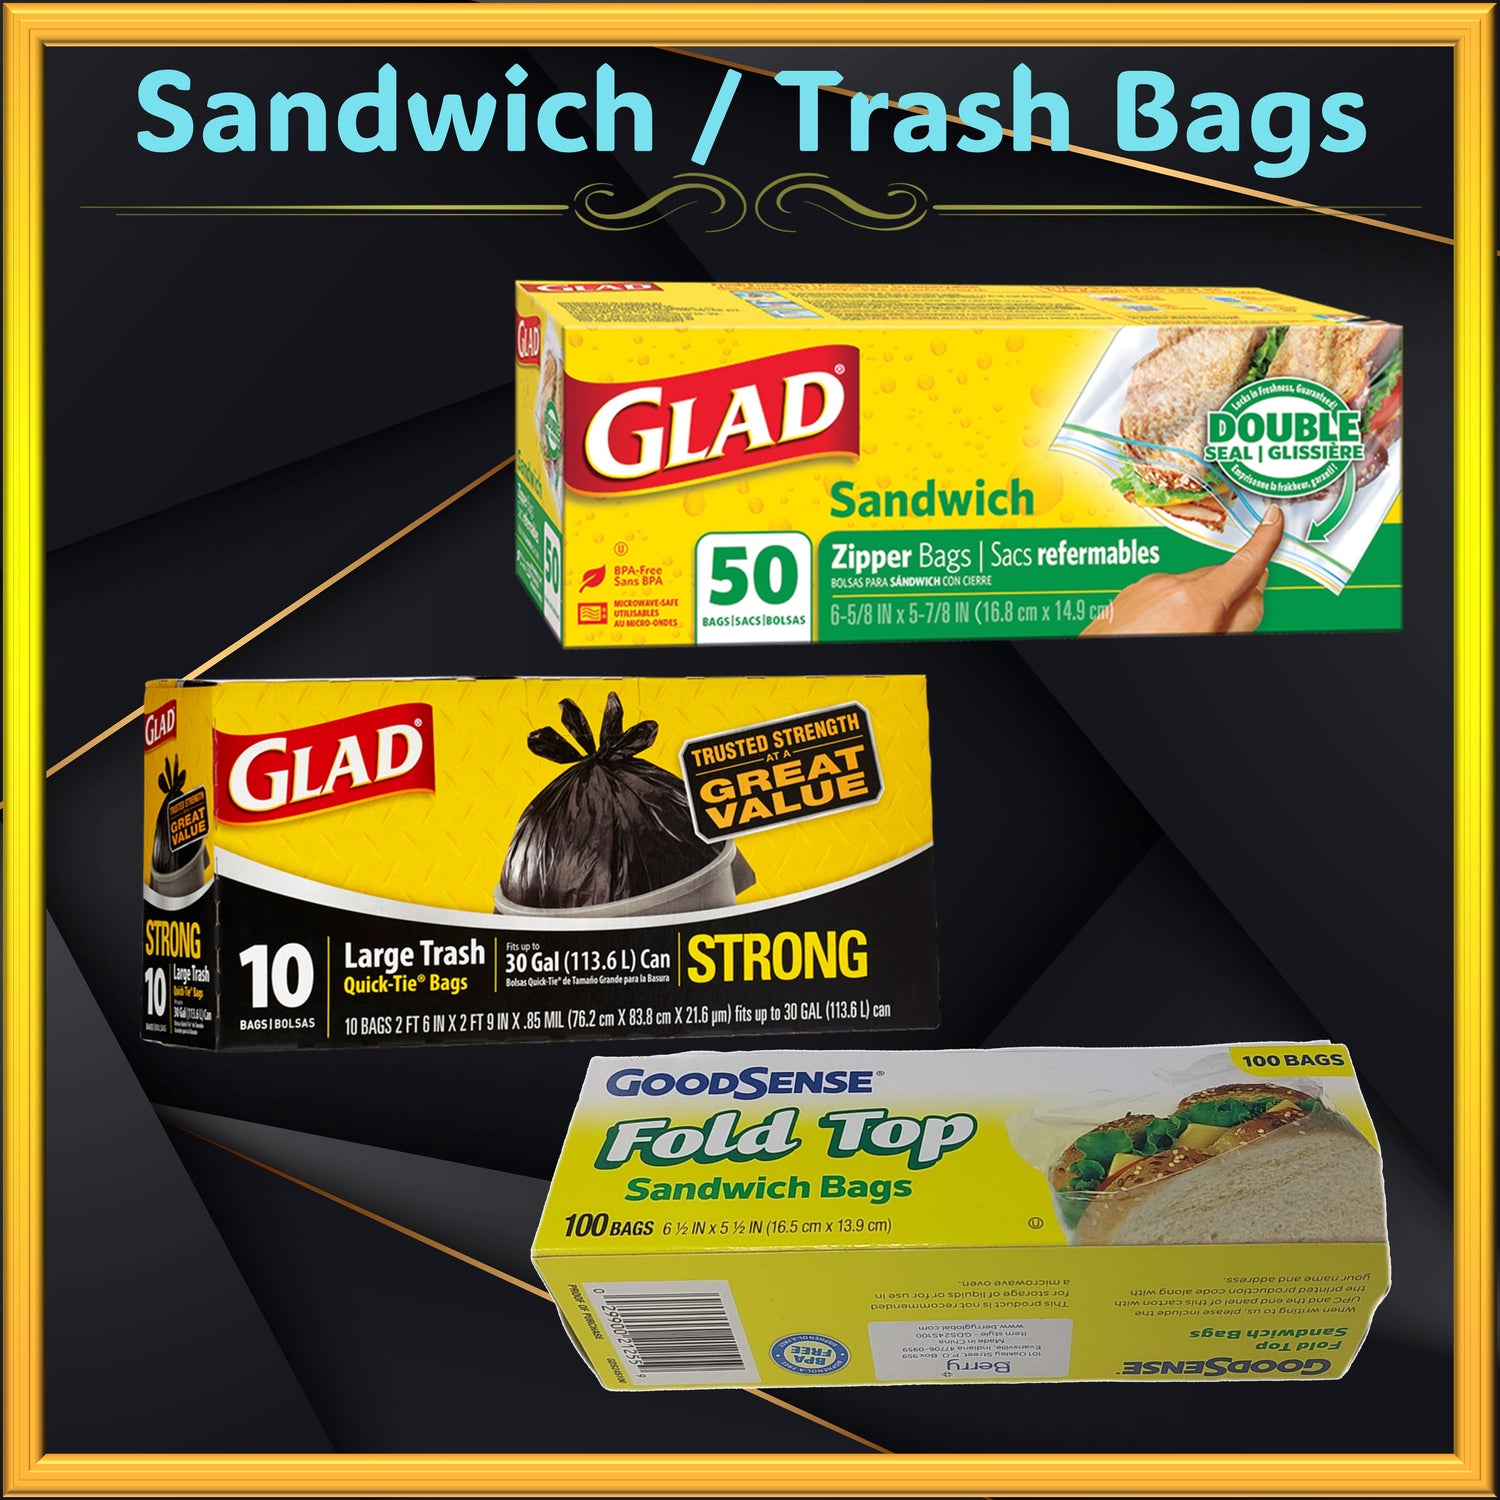 Sandwich / Trash Bags